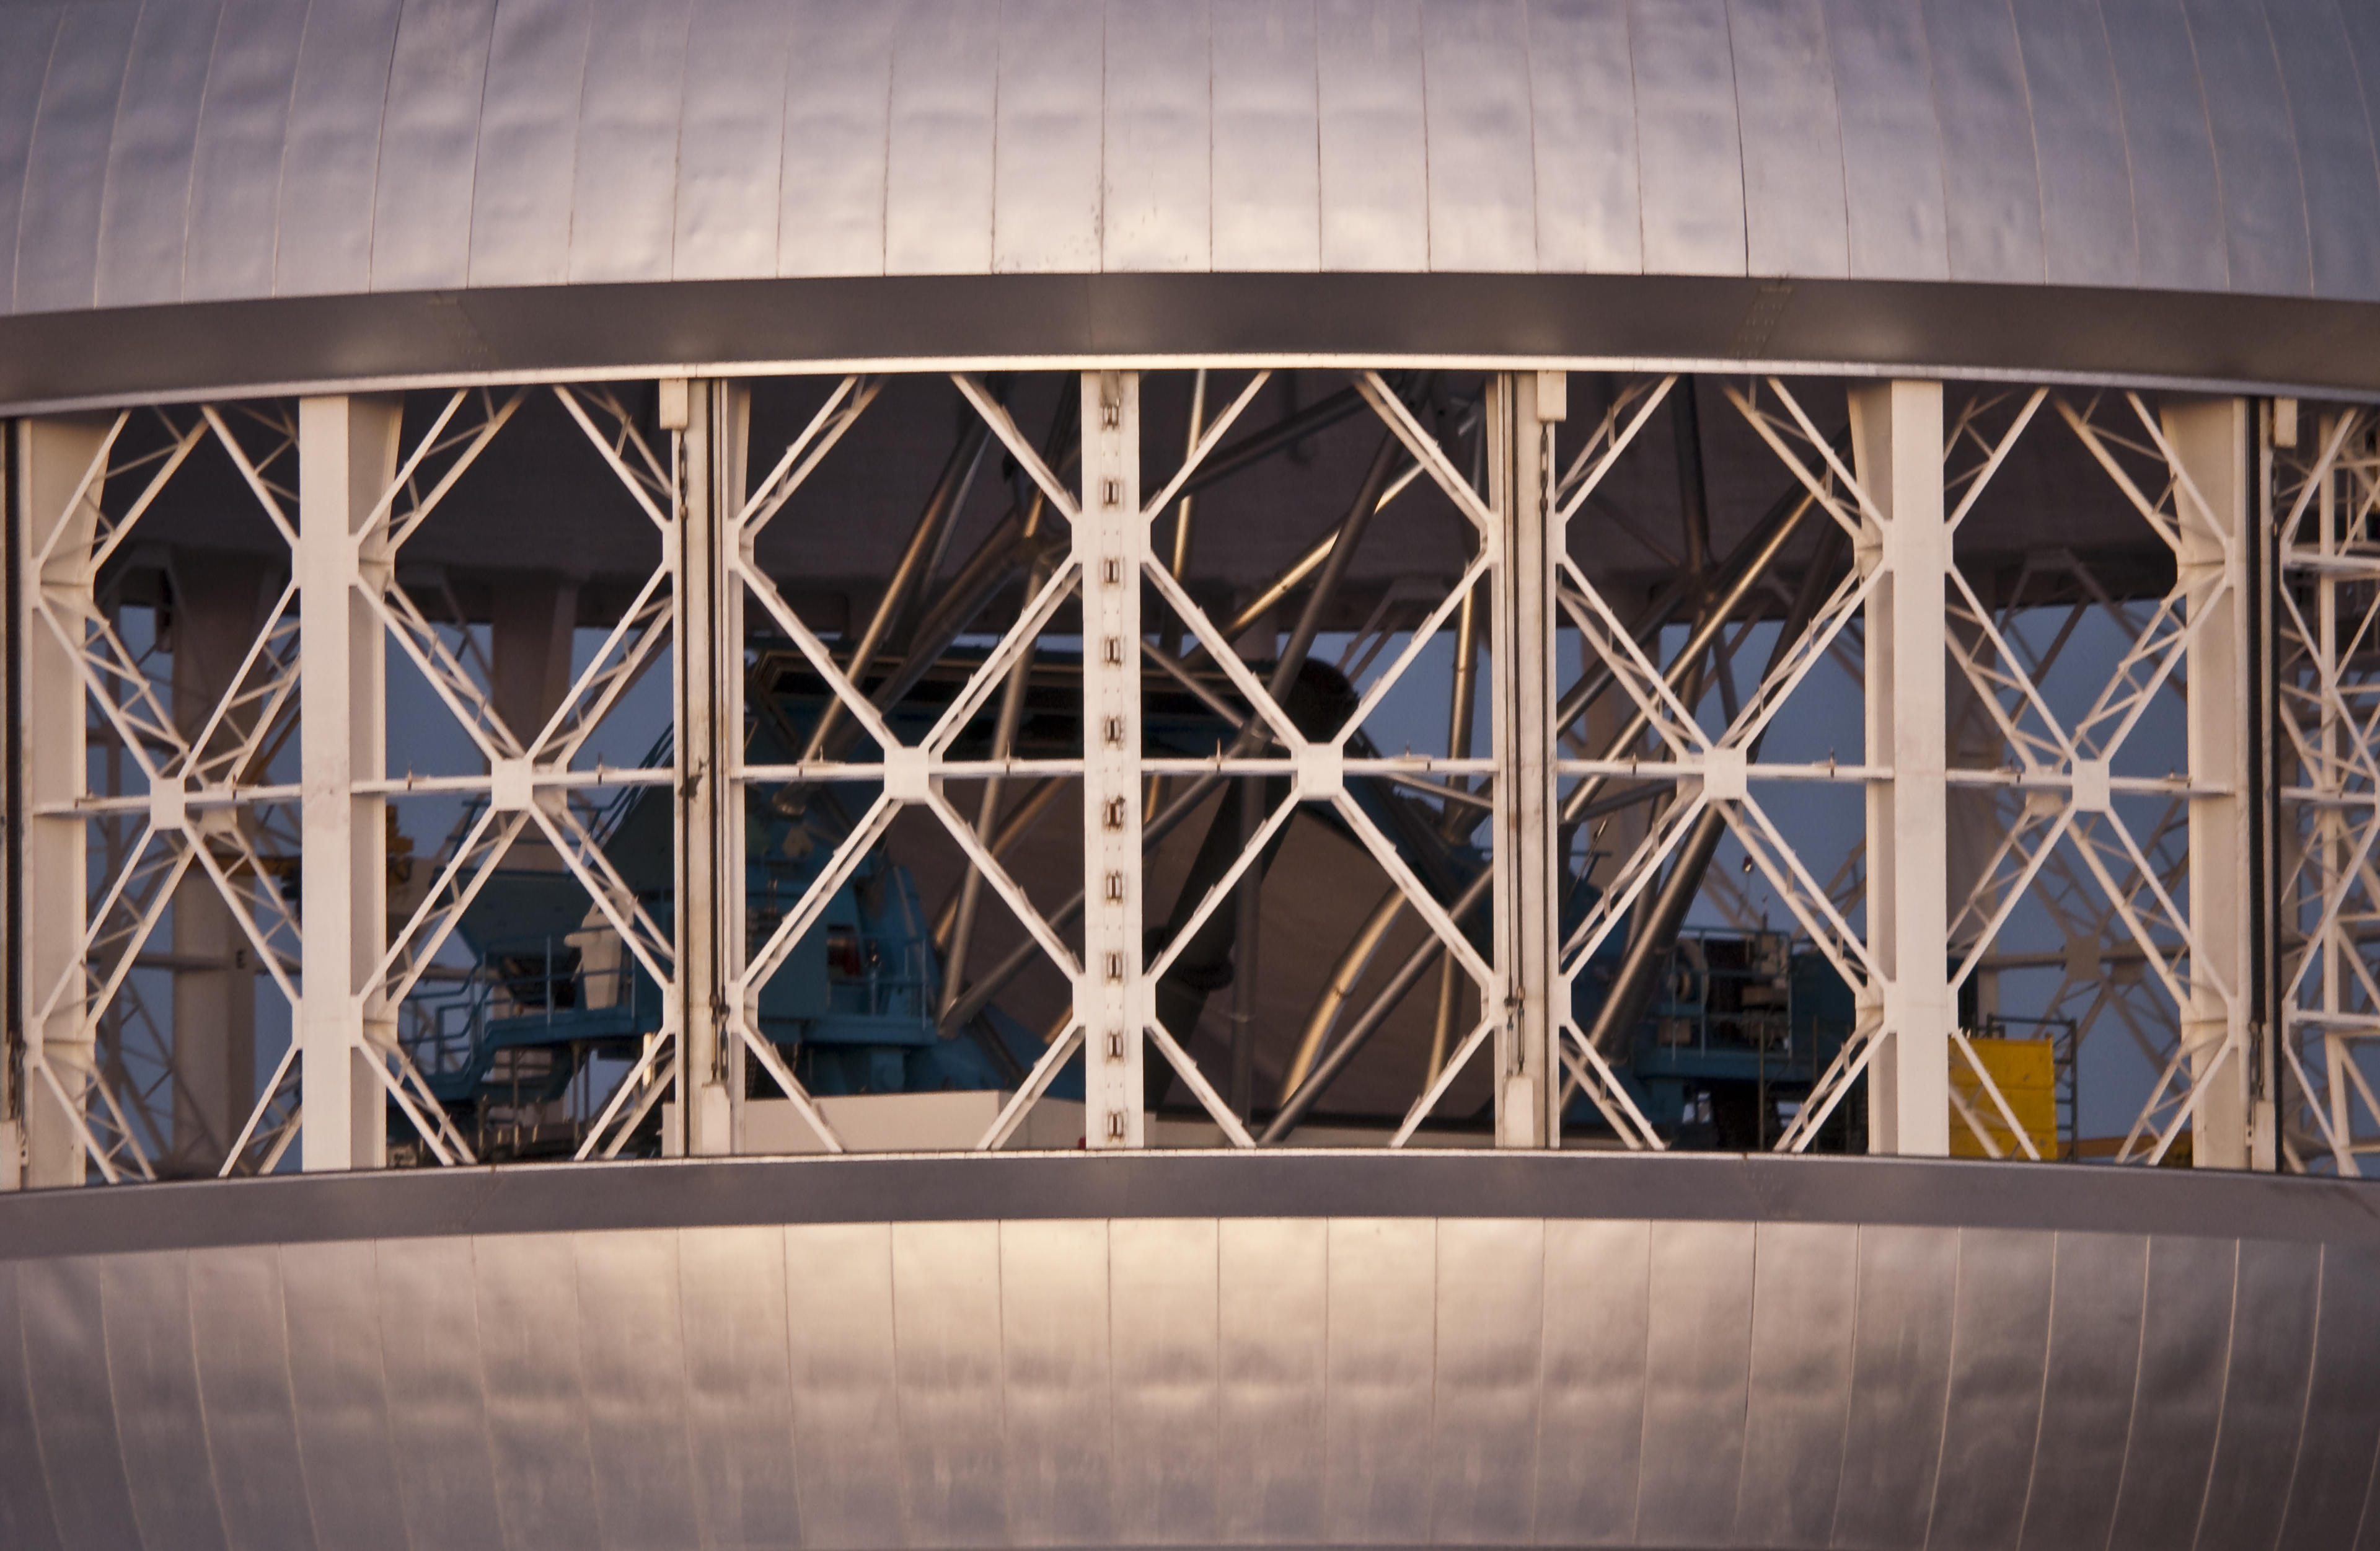 Telescope Through the Vents